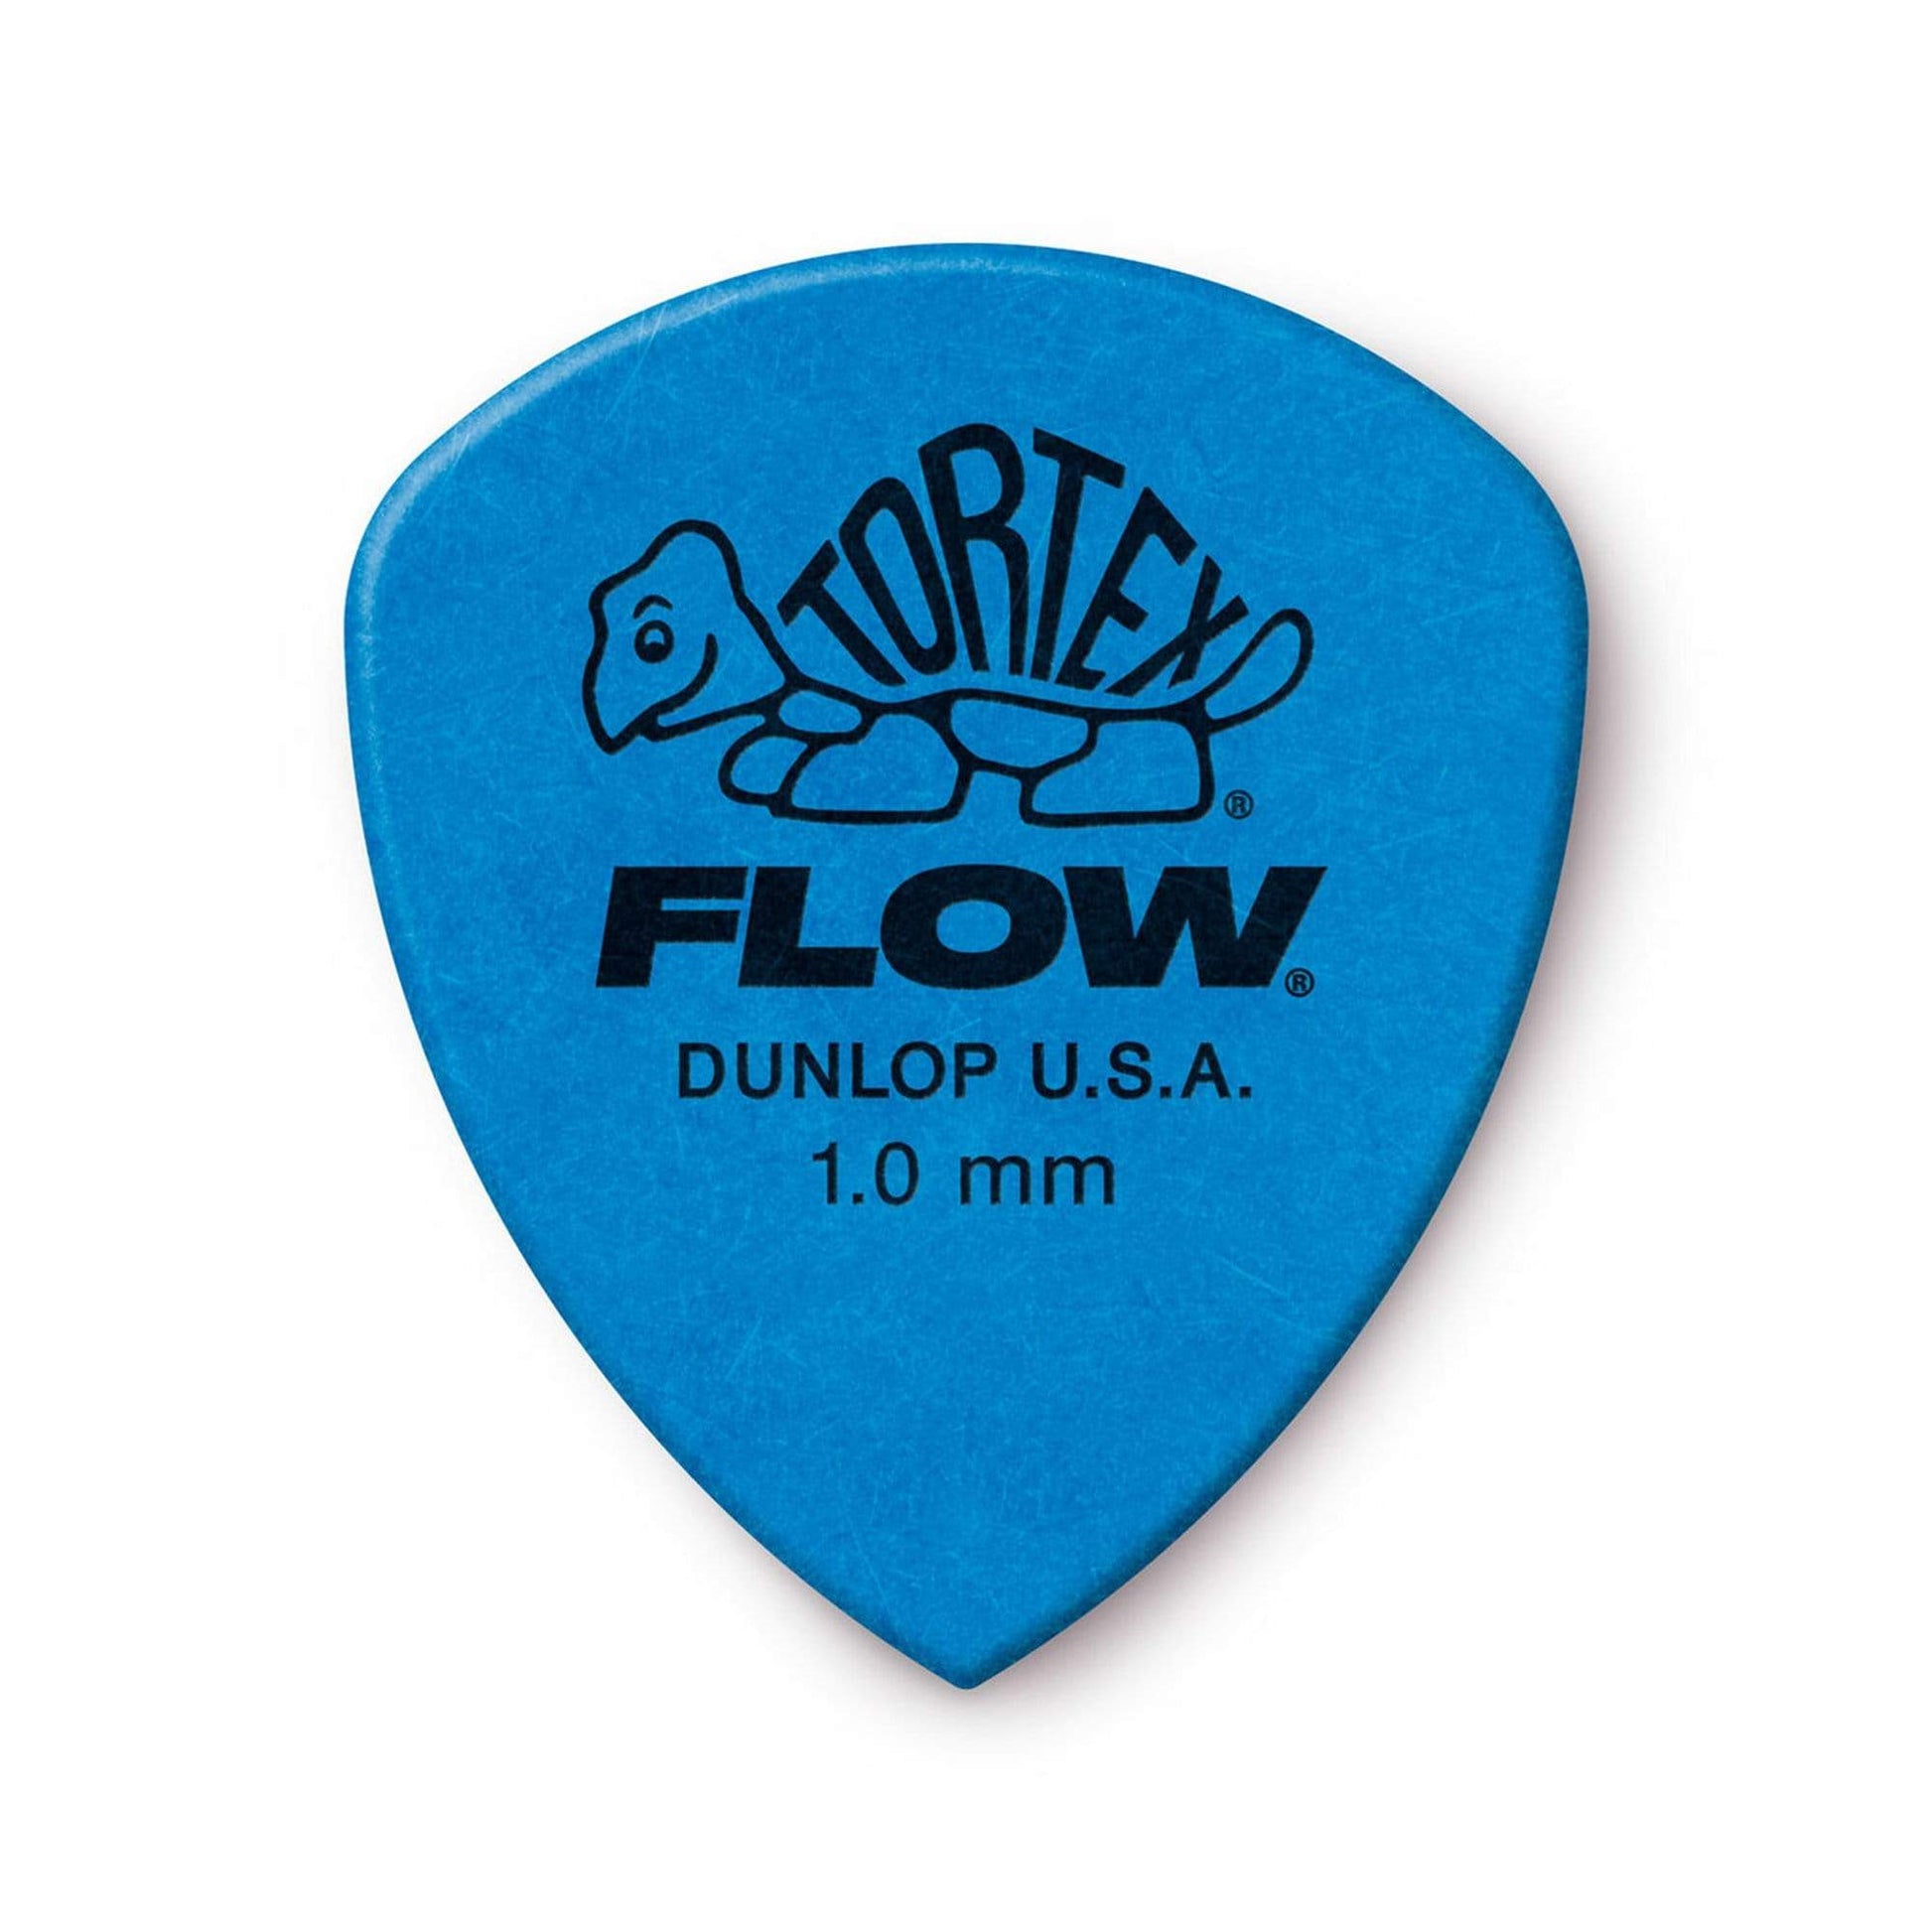 Dunlop Tortex Flow 1.0 mm Guitar Picks 2 Pack (24) Bundle Accessories / Picks